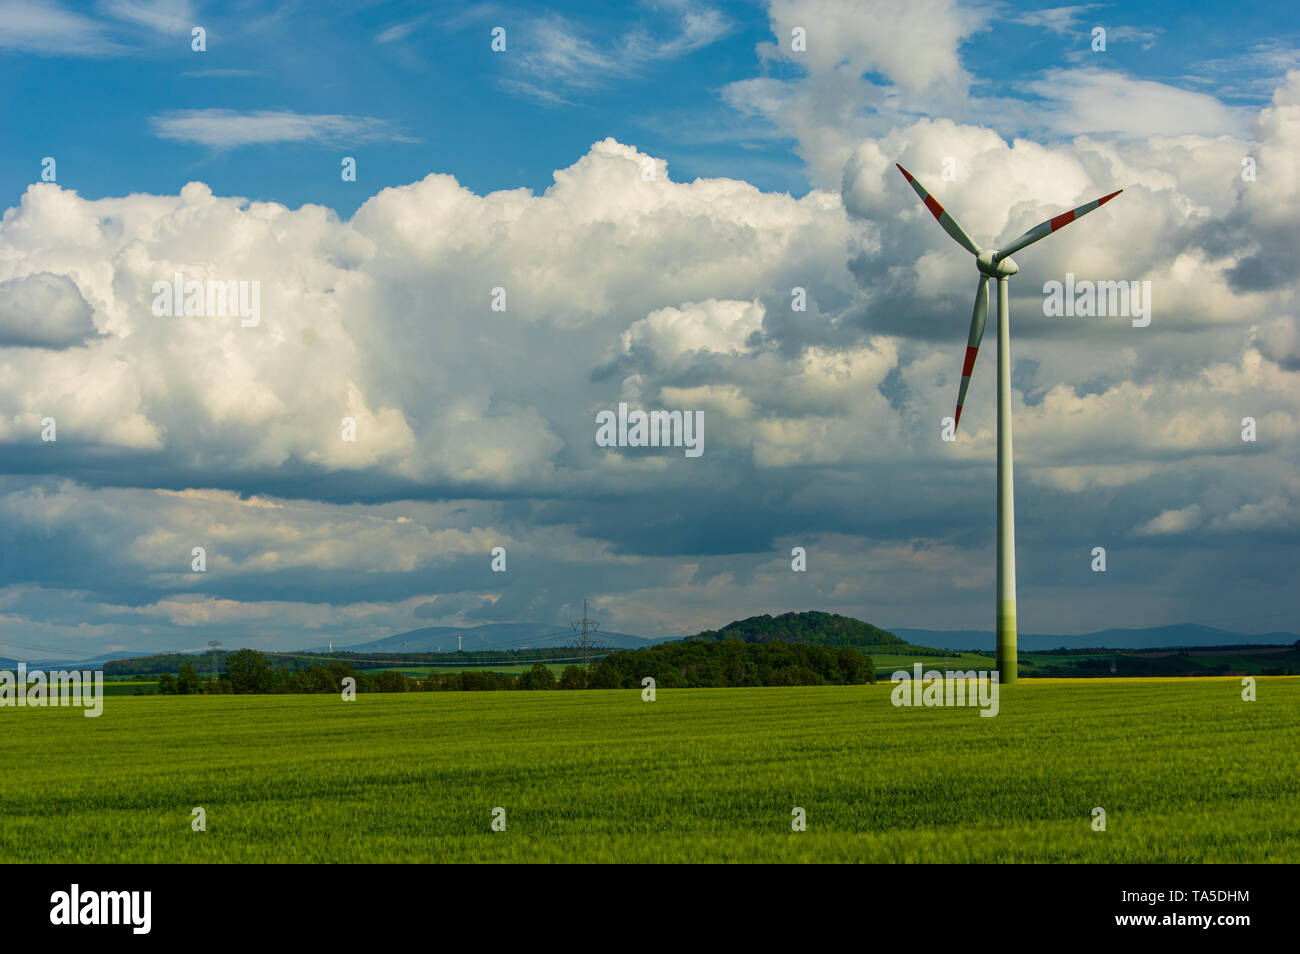 single wind turbine in rural area in front of storm cloud cumulus sky Stock Photo